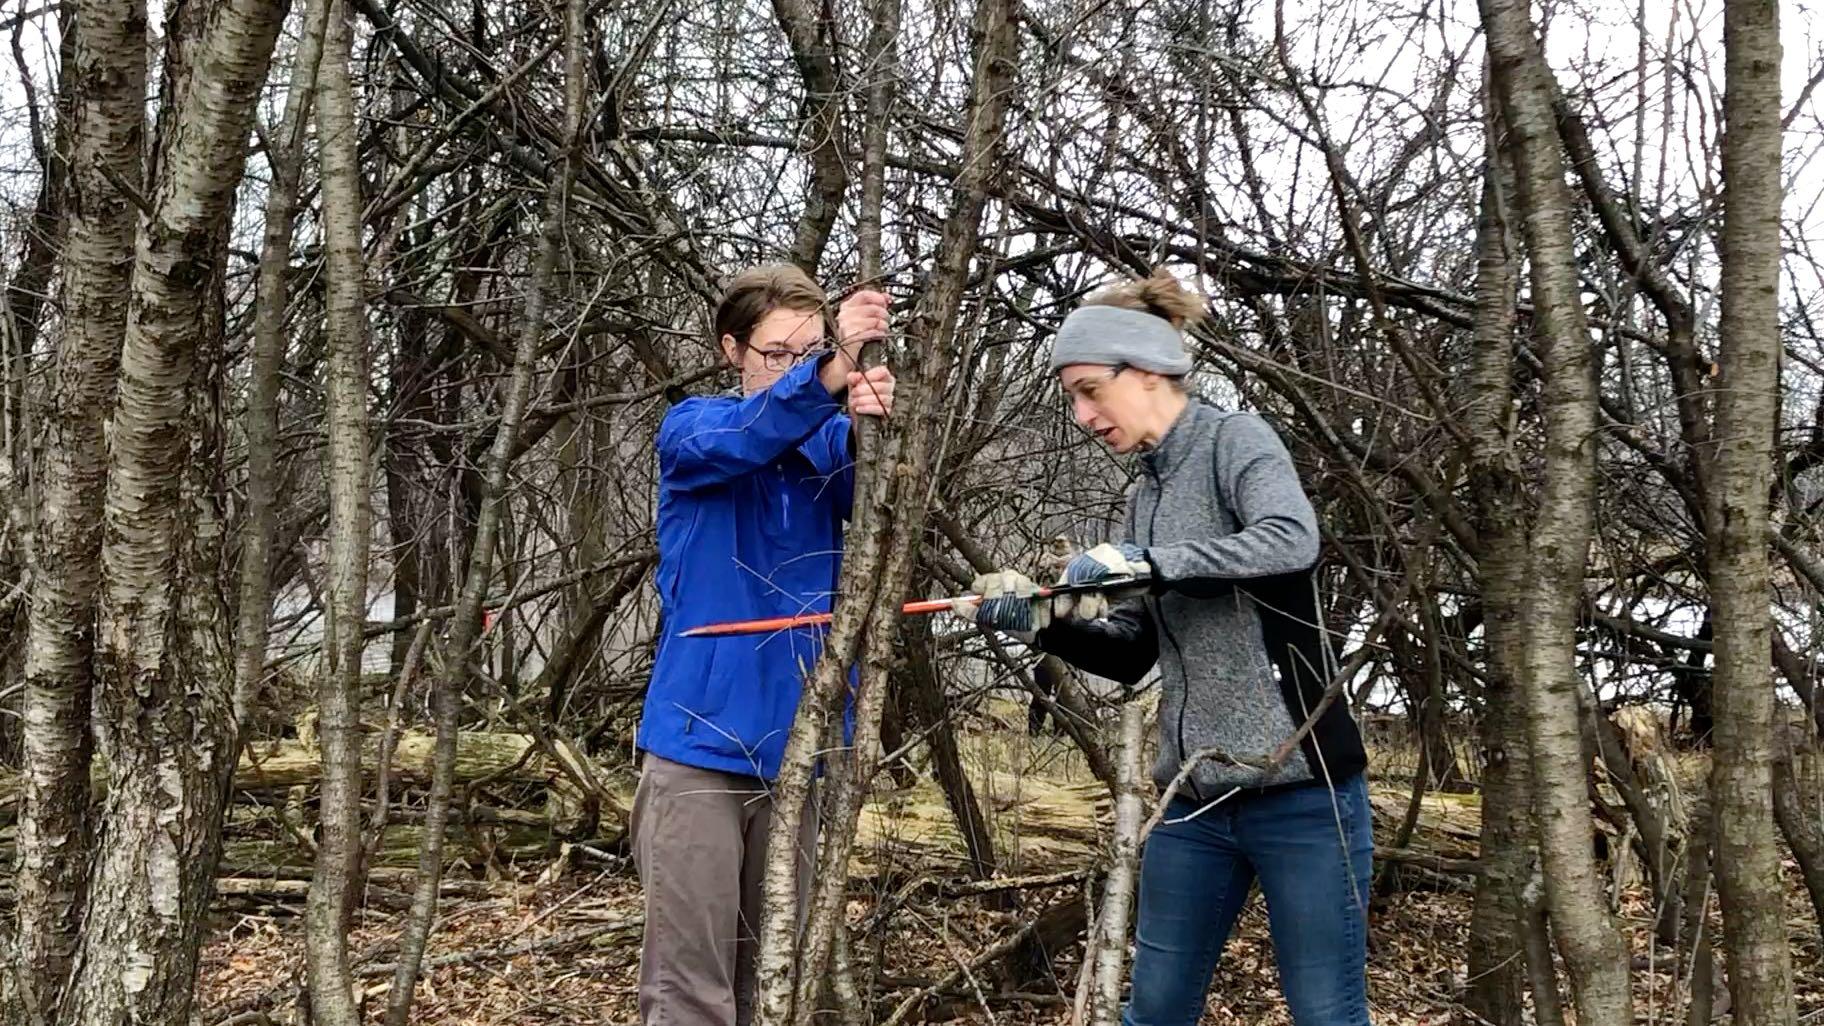 Shedd Aquarium biologist Melissa Youngquist (left) and volunteer Beth Herzfeld team up to take down some buckthorn. (Patty Wetli / WTTW News)